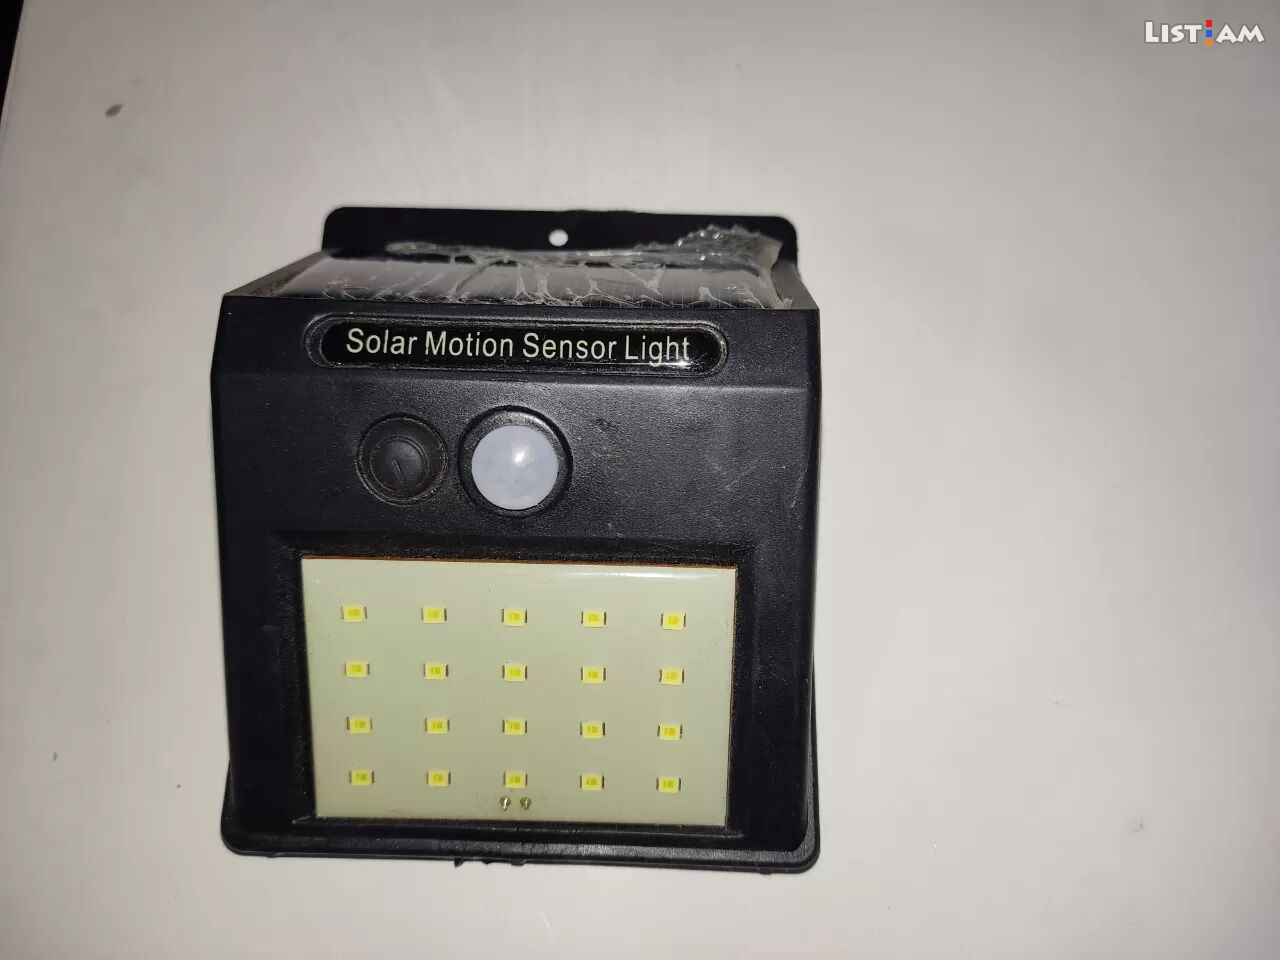 Solar motion sensor